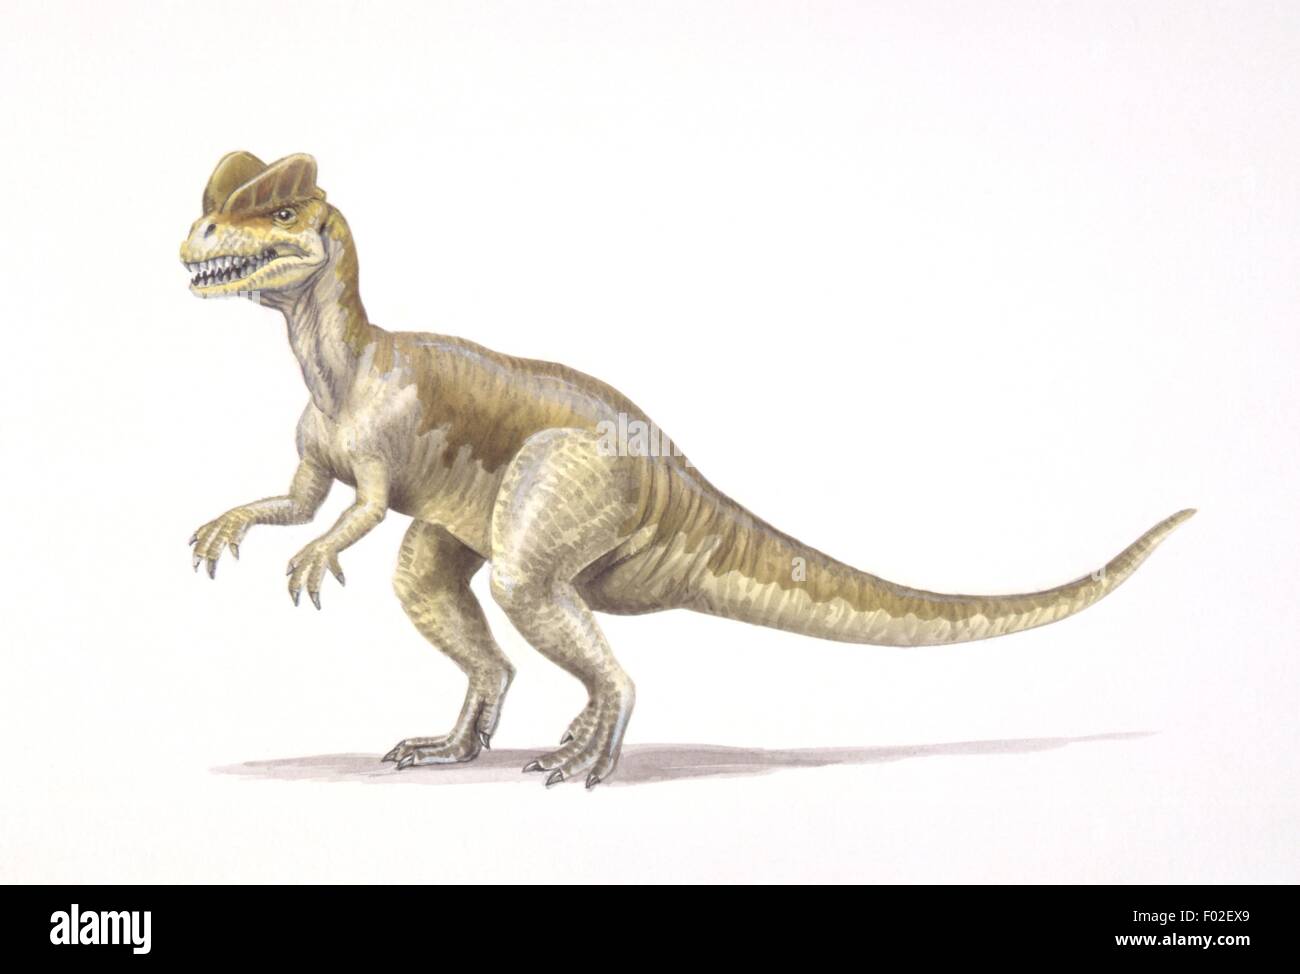 Palaeozoology - Jurassic period - Dinosaurs - Dilophosaurus - Art work Stock Photo